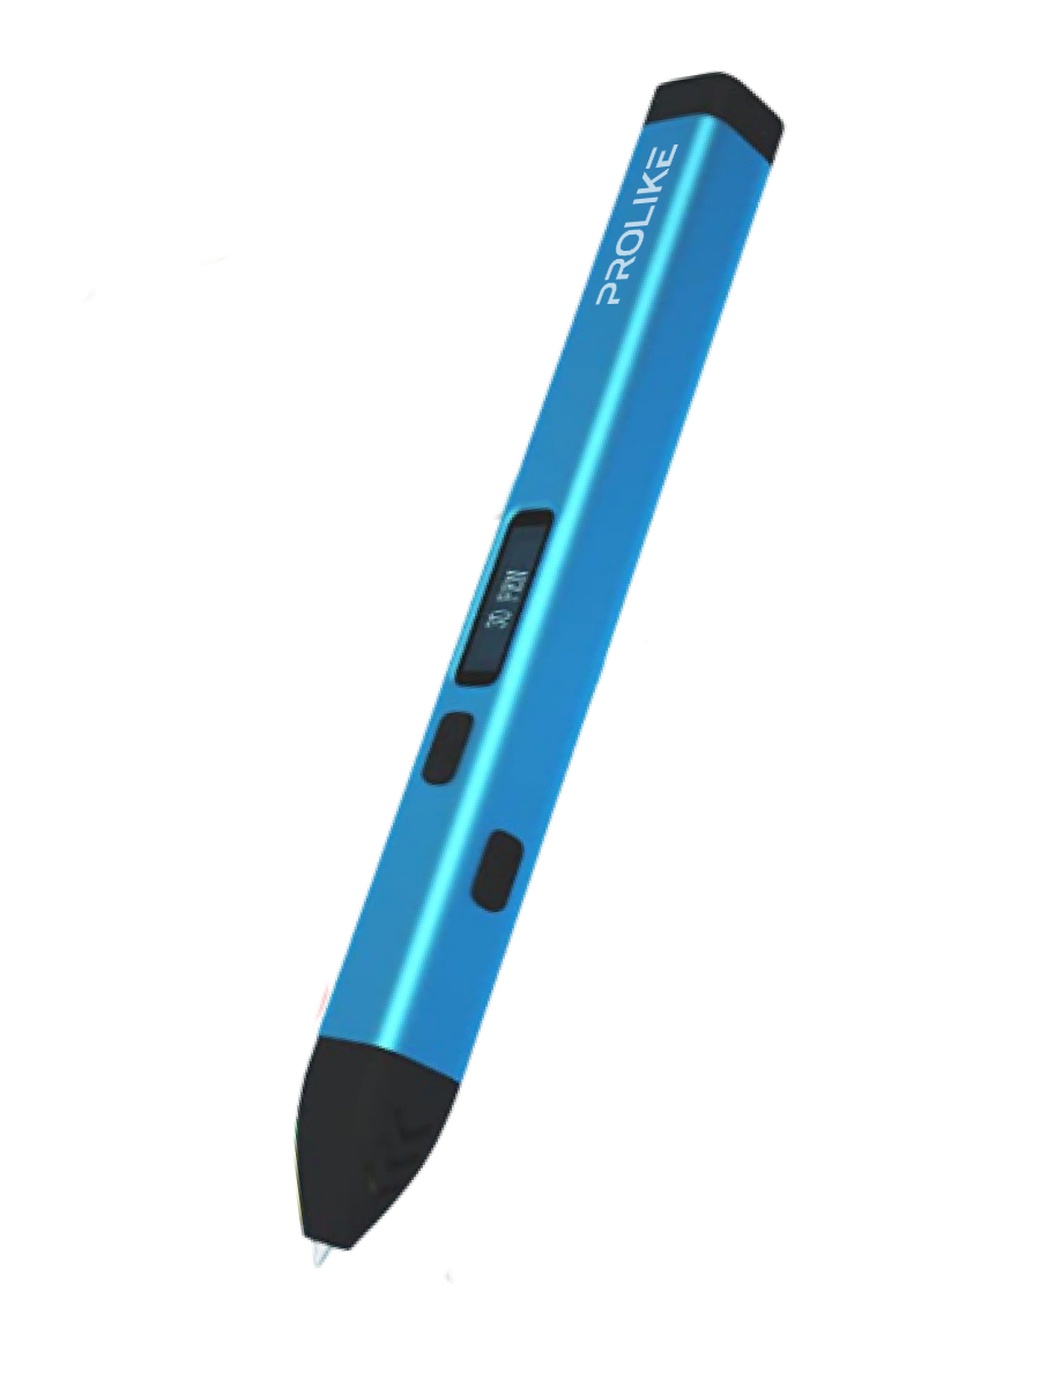 3D ручка Prolike с дисплеем, цвет голубой фото